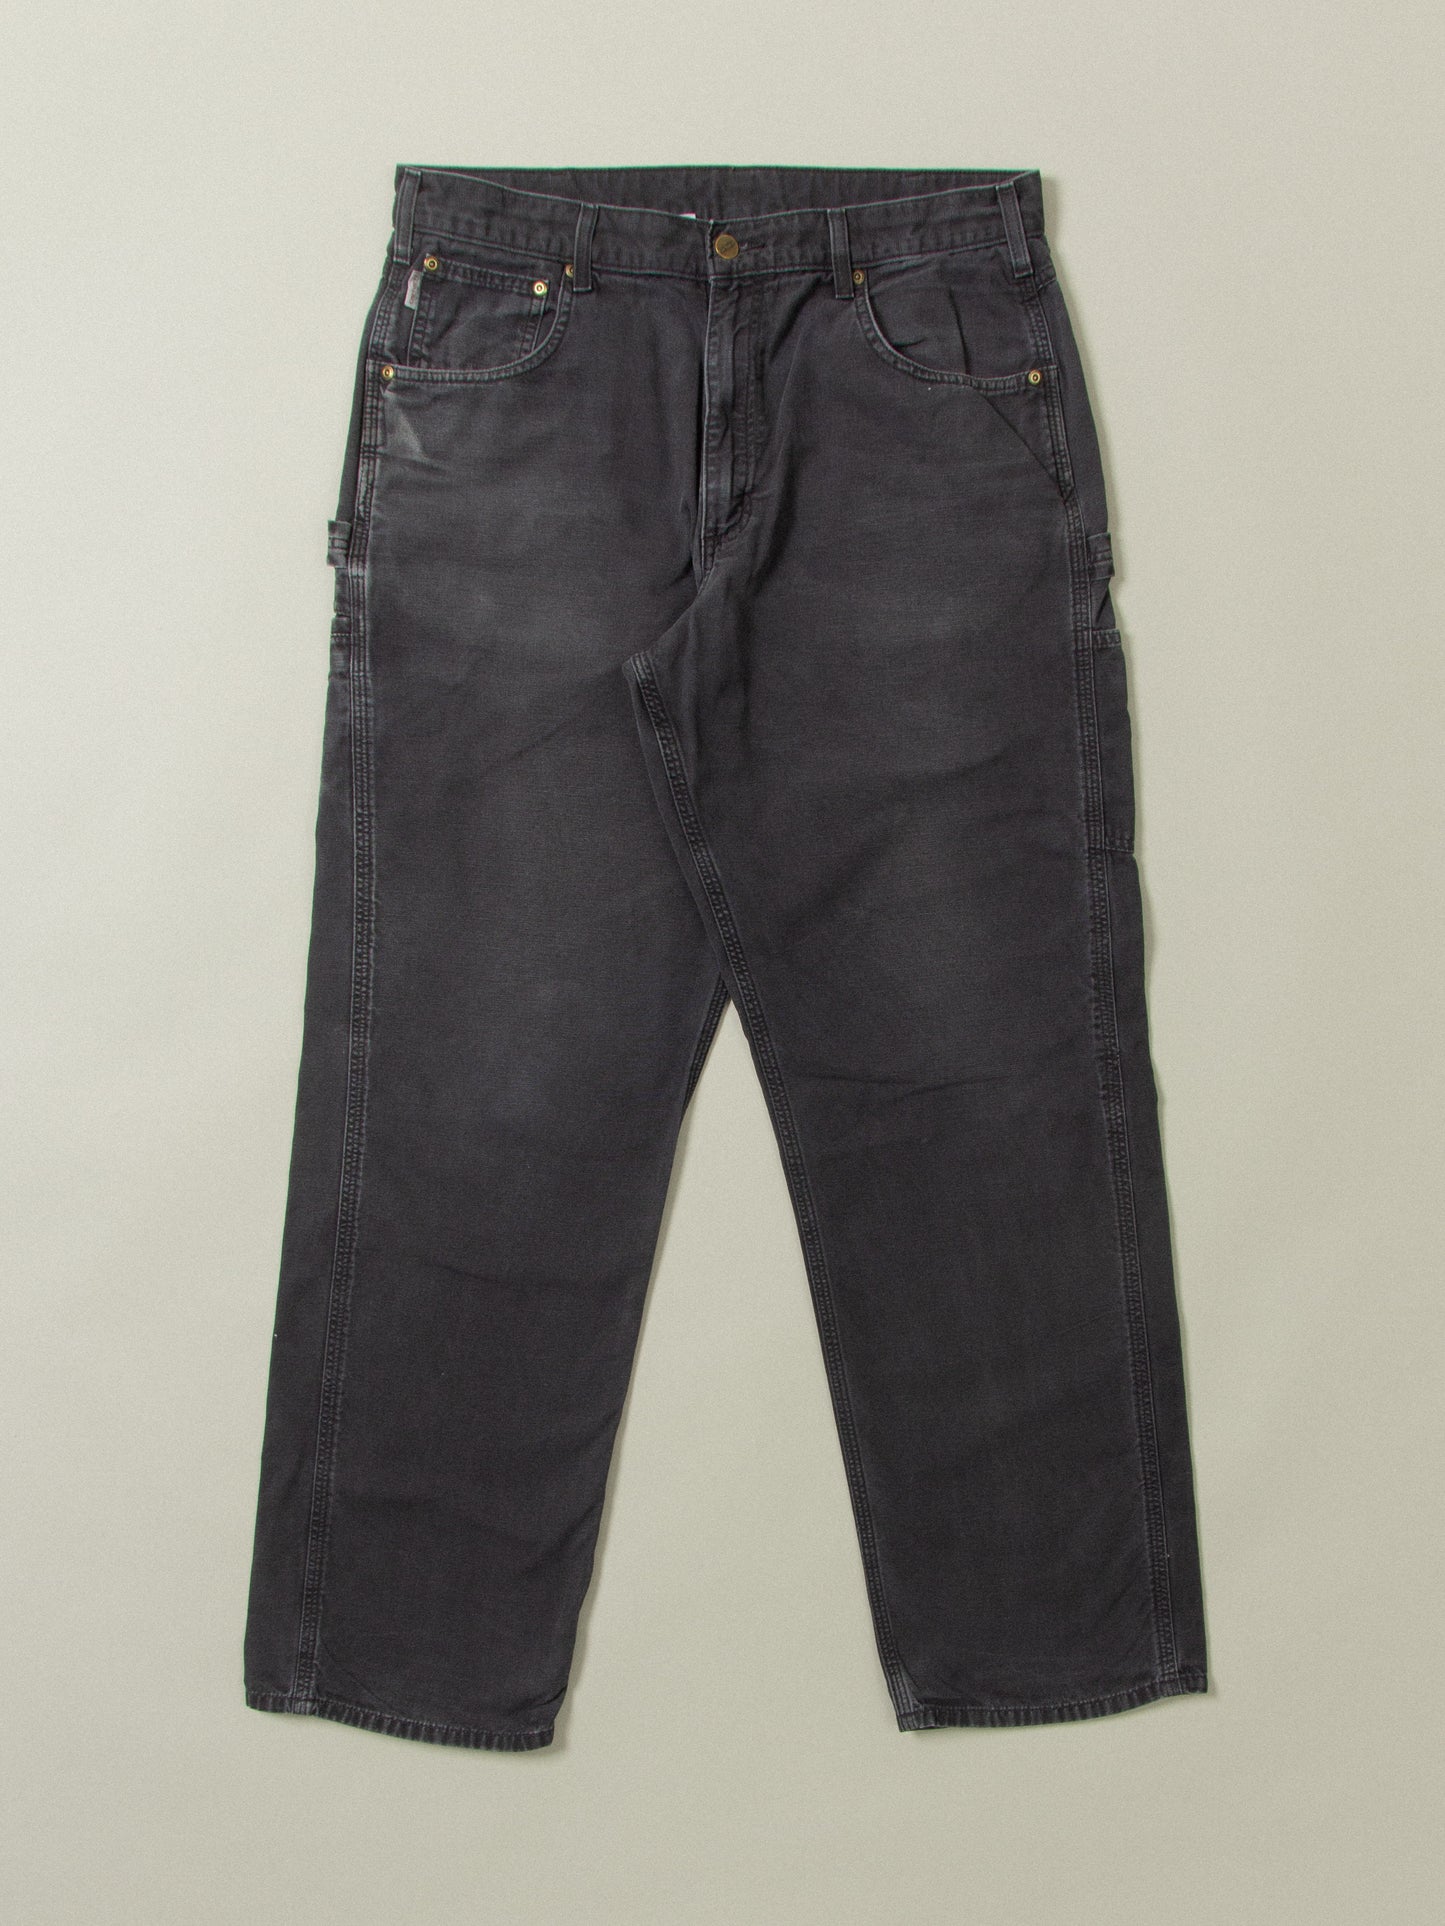 Carhartt Carpenter Trousers (36x34)